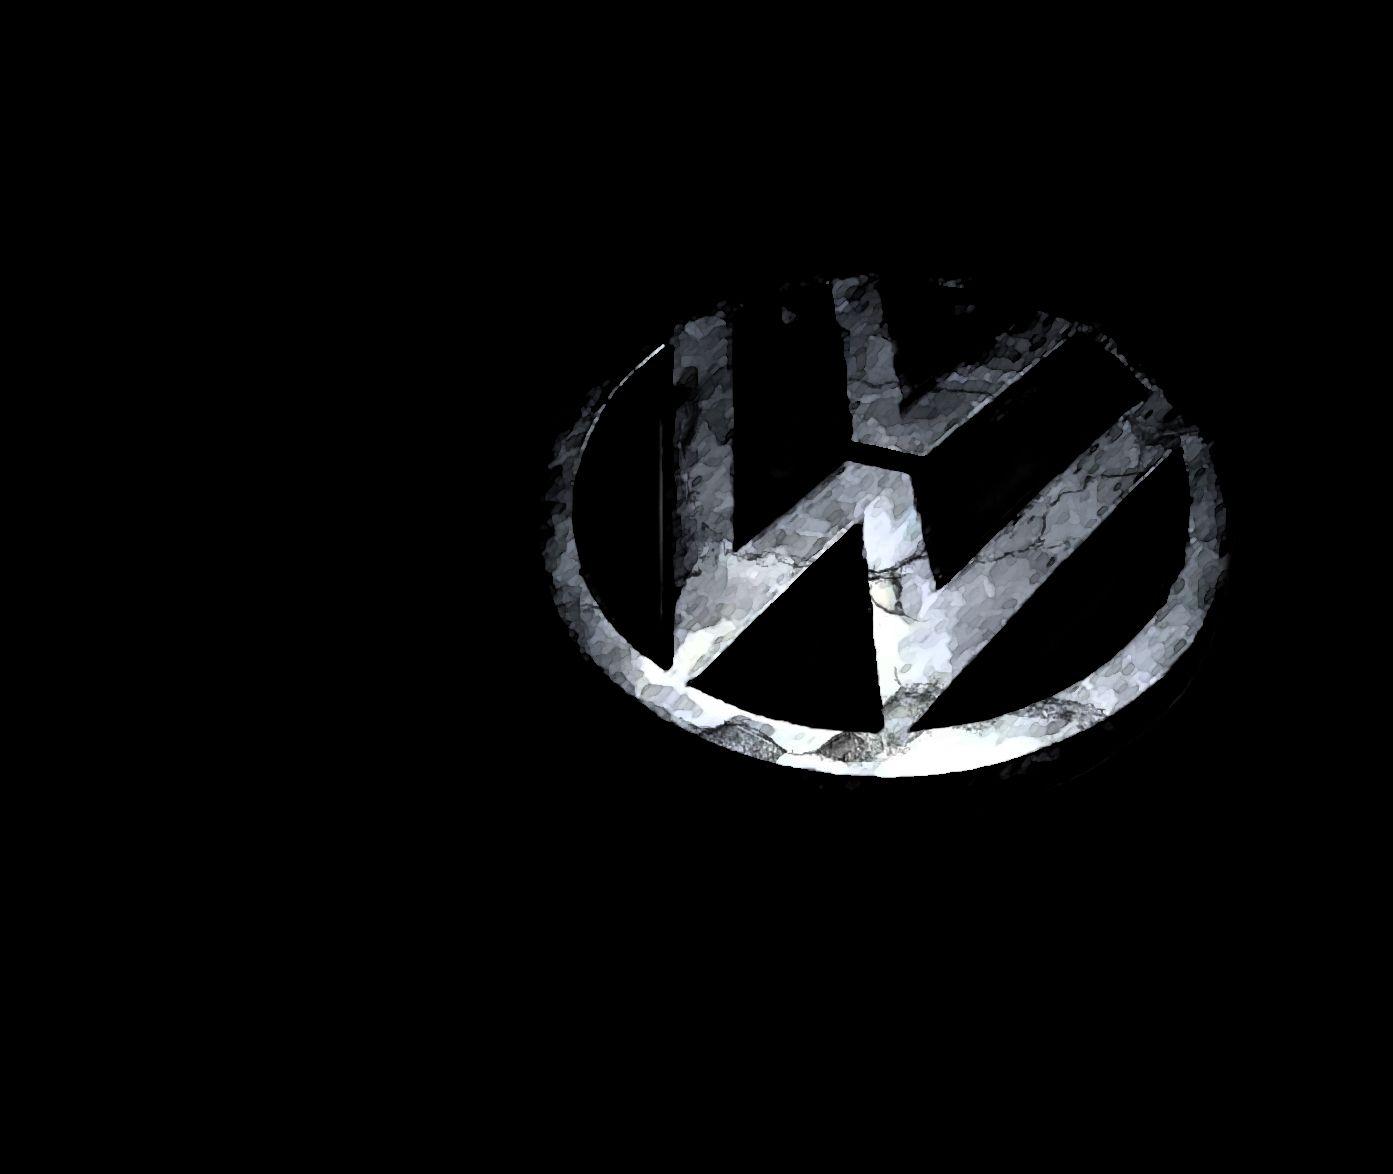 4K Ultra HD Volkswagen Photo, by Lana Sova for desktop and mobile